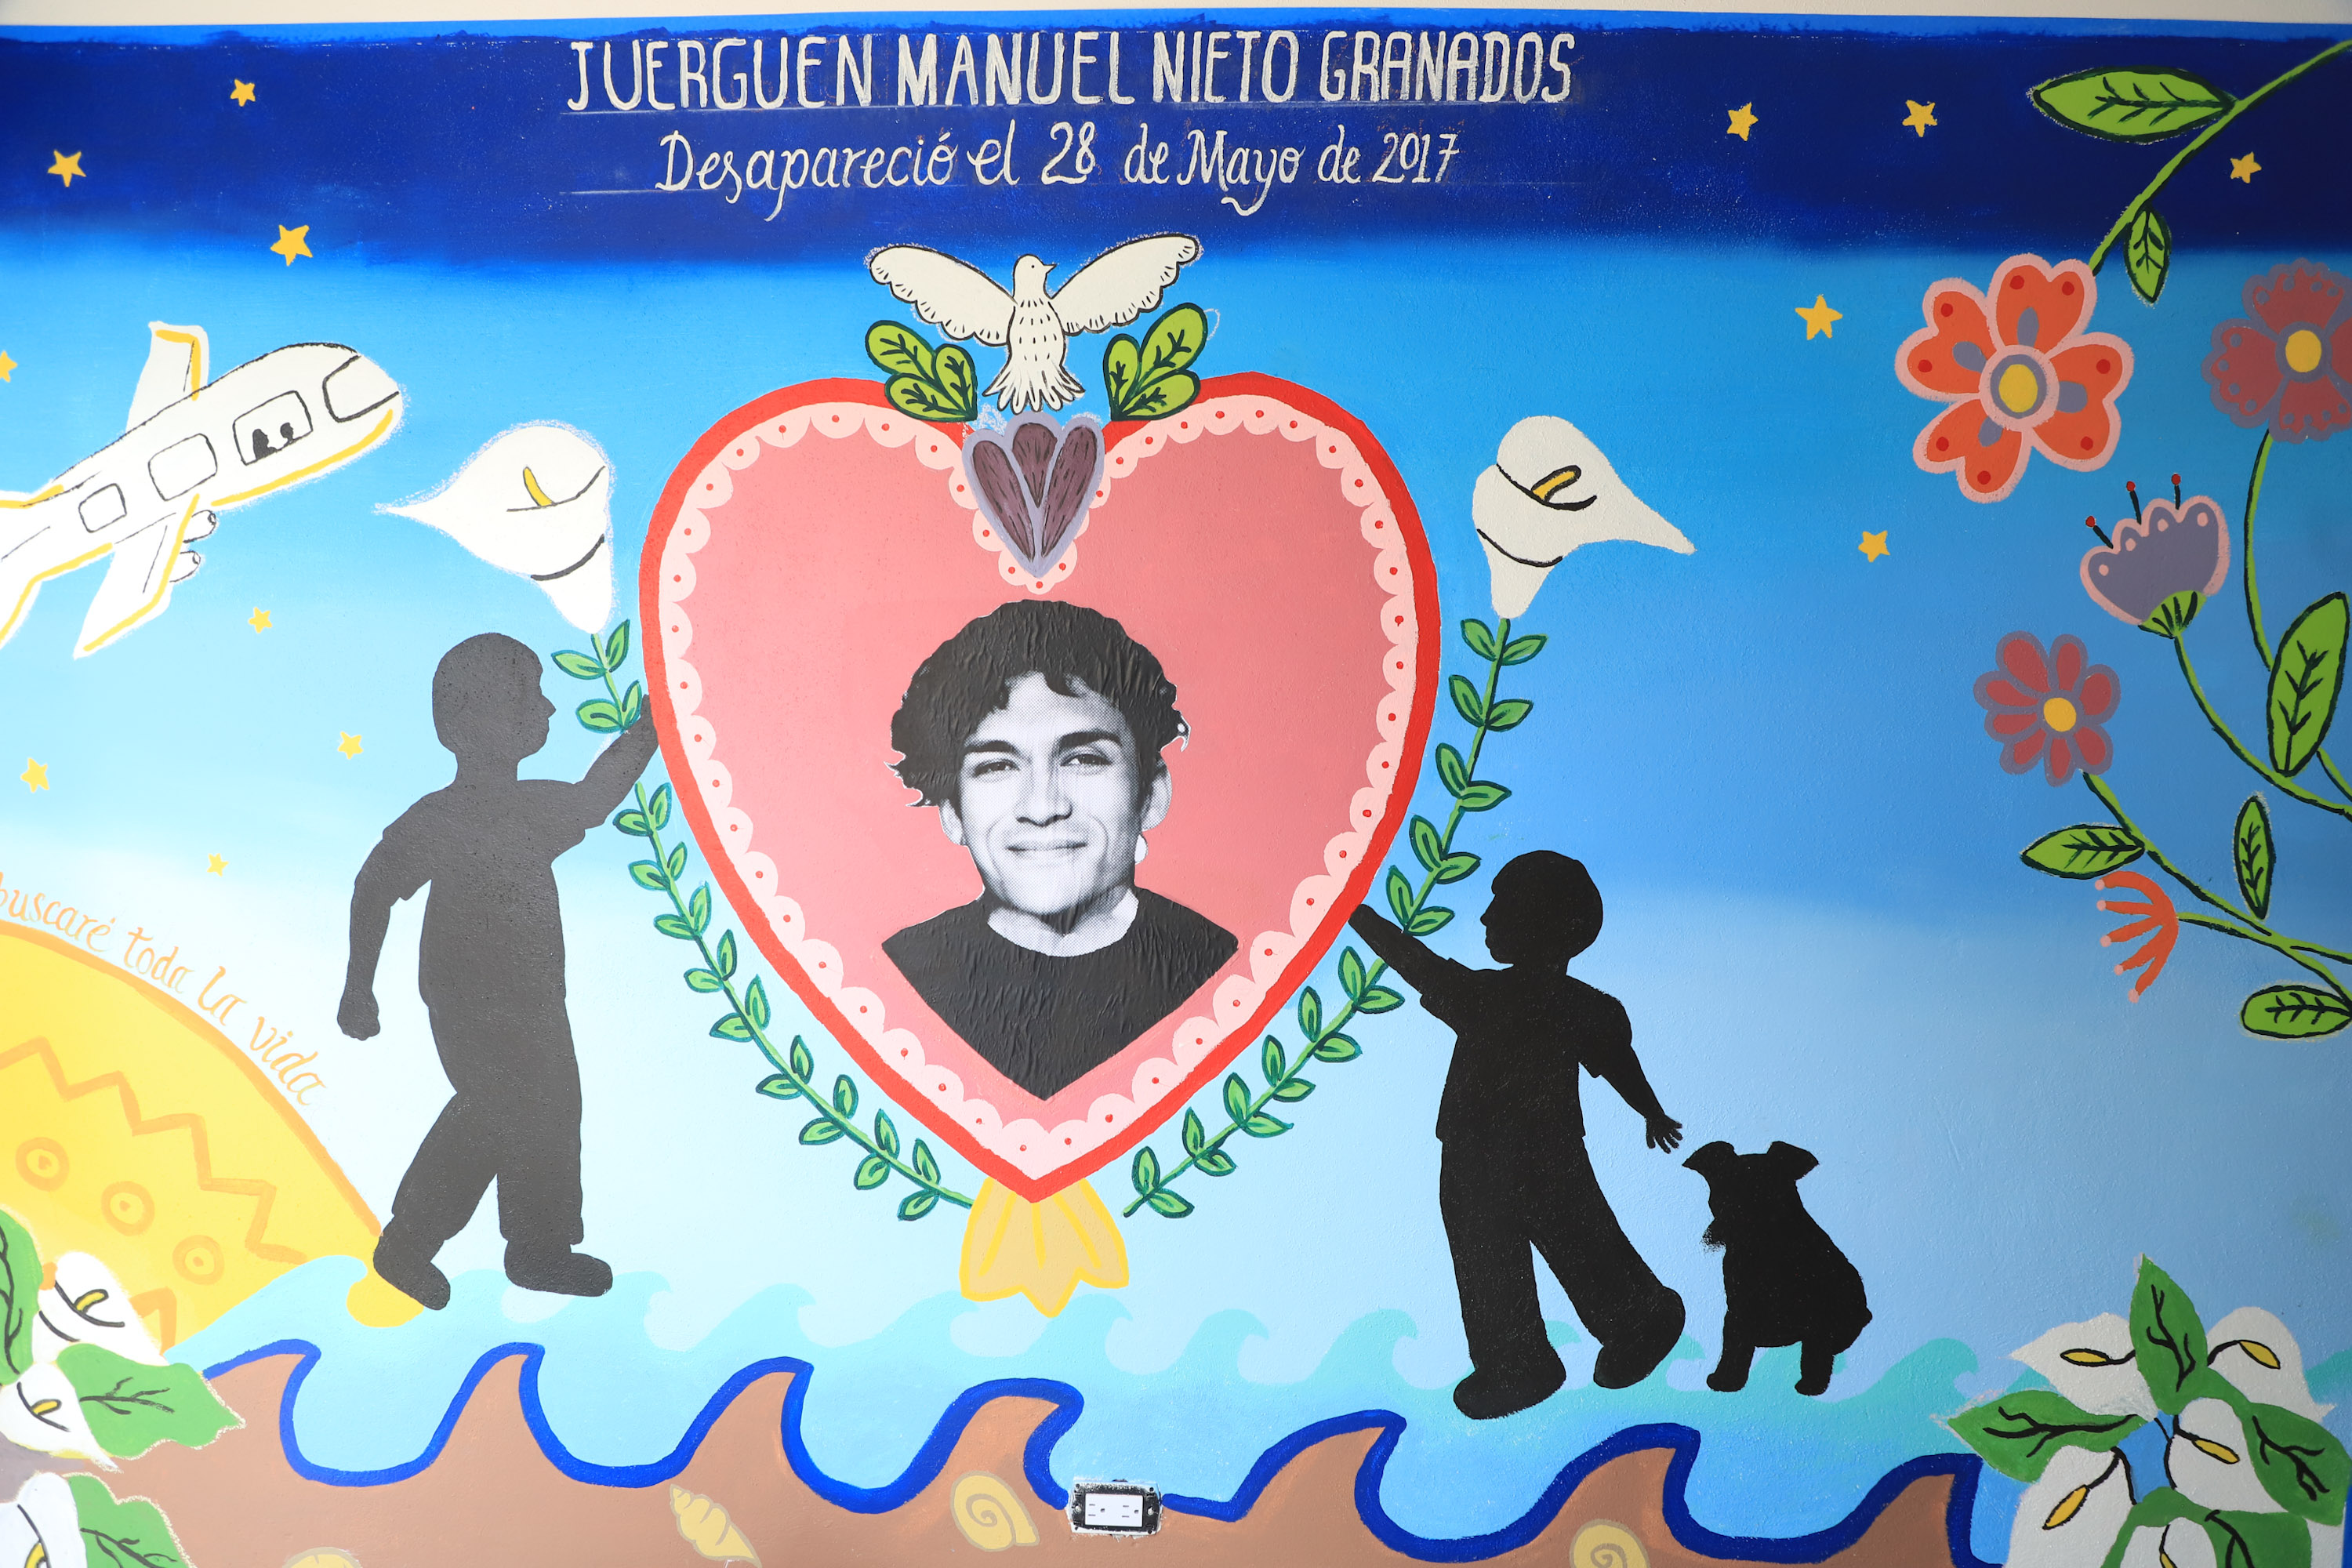 Plasman mural en honor a Juerguen Manuel Nieto